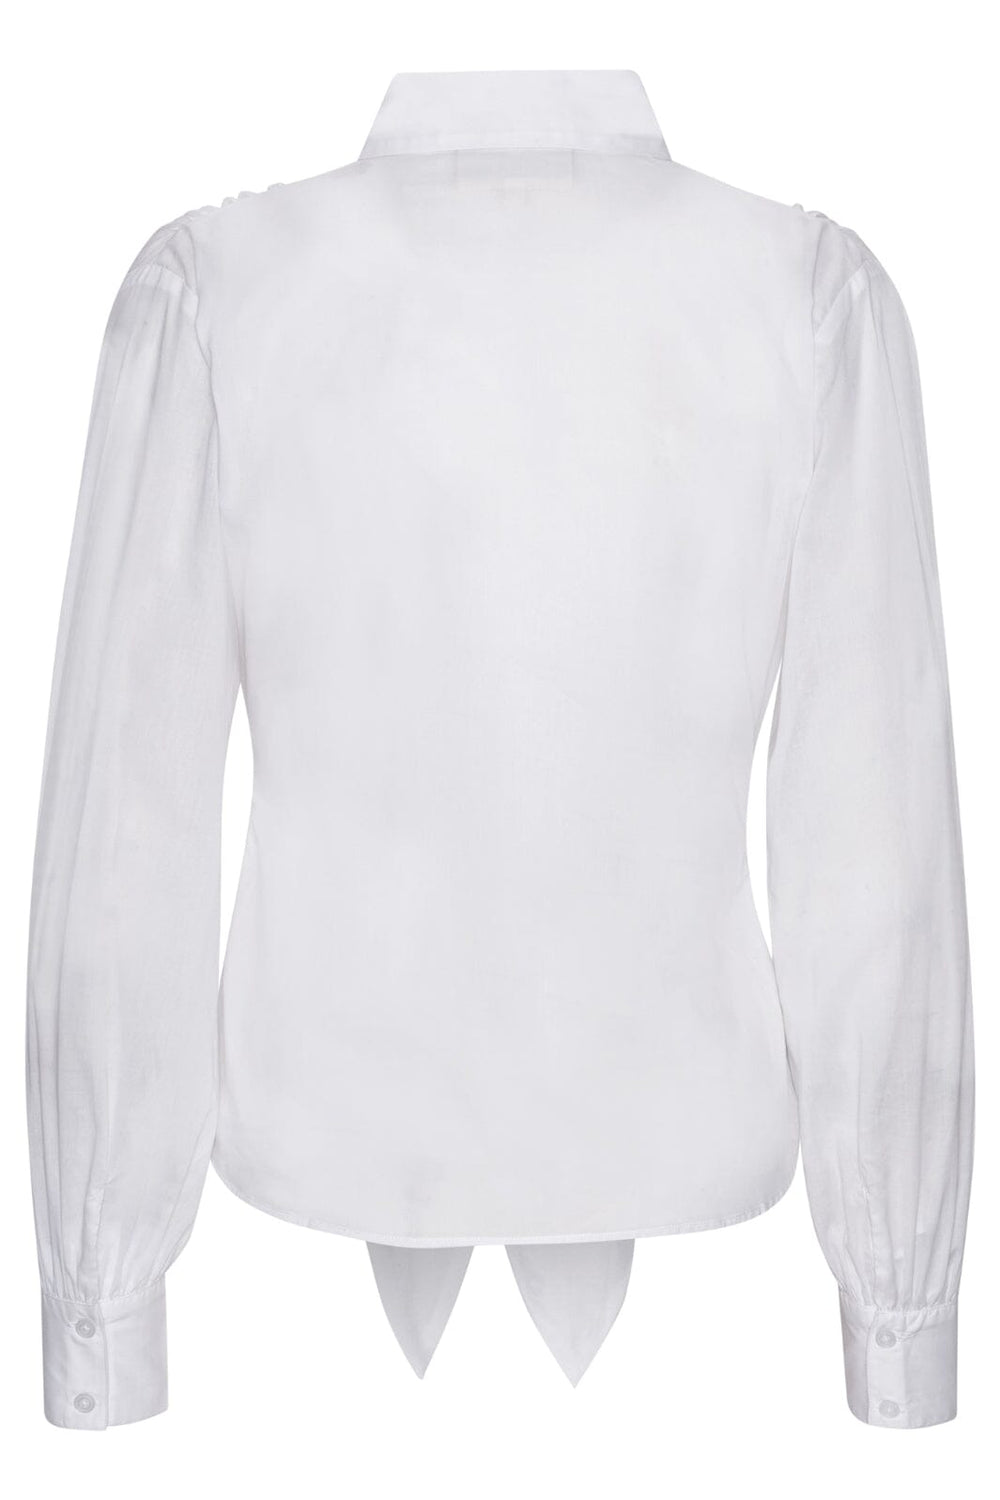 Karmamia - Lee Shirt - White Poplin Skjorter 